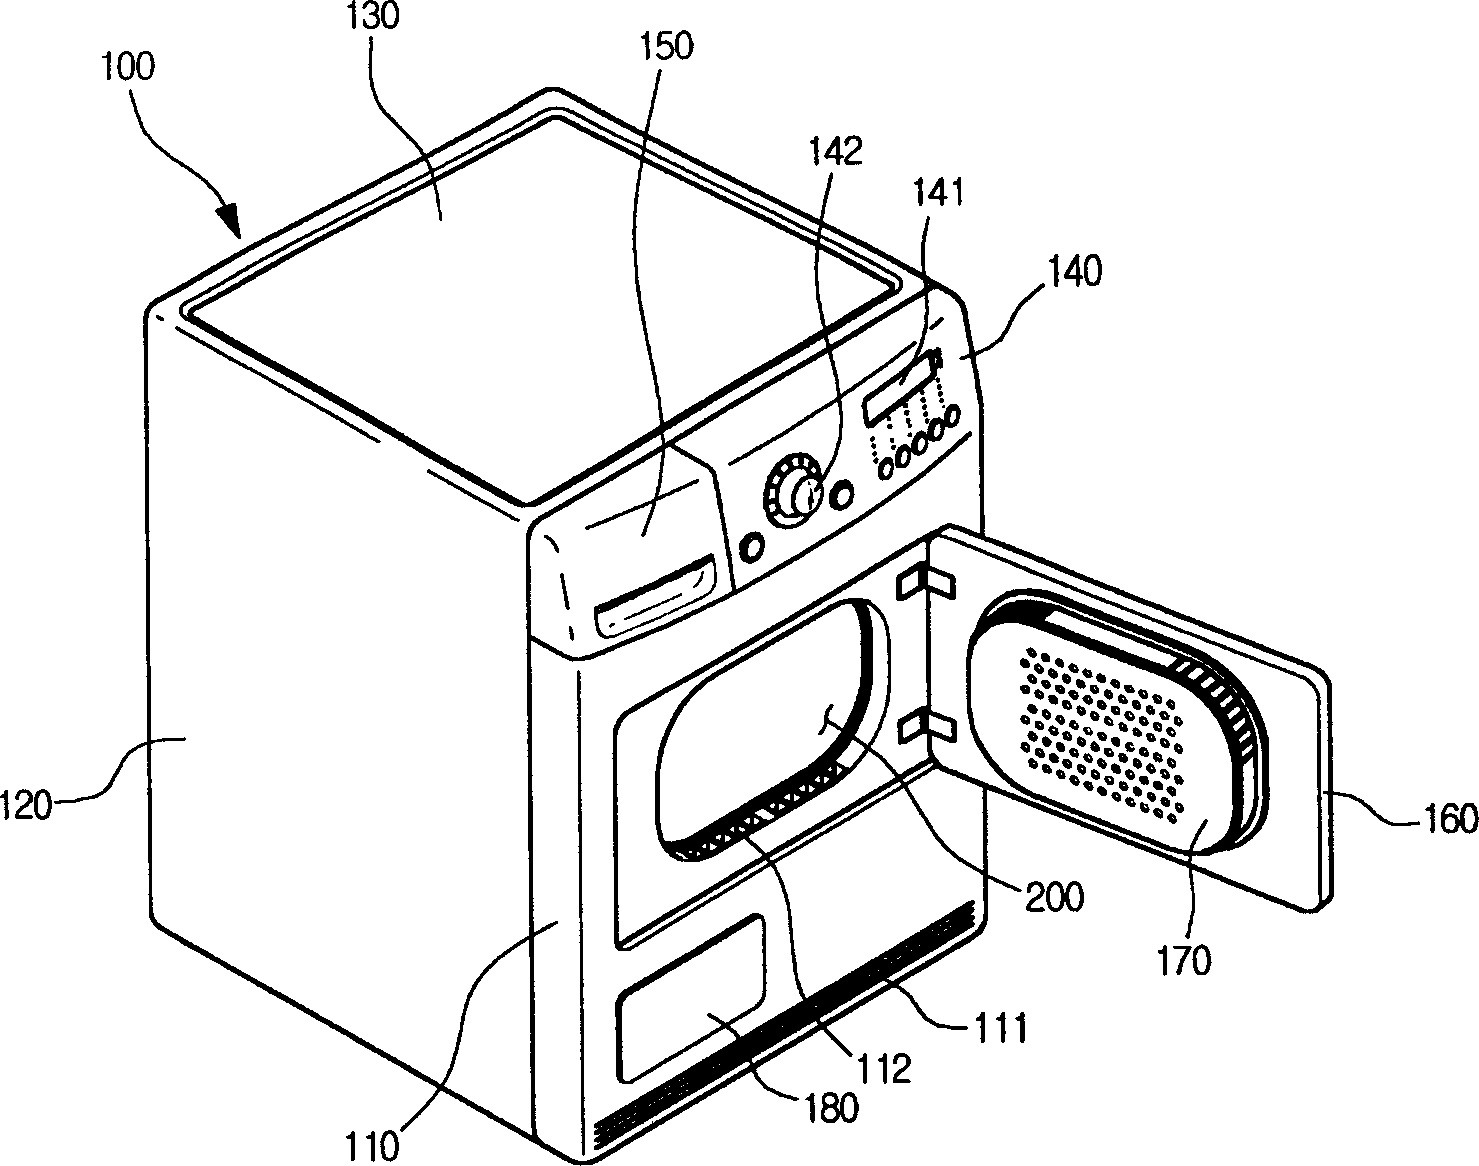 Drum structure of dryer